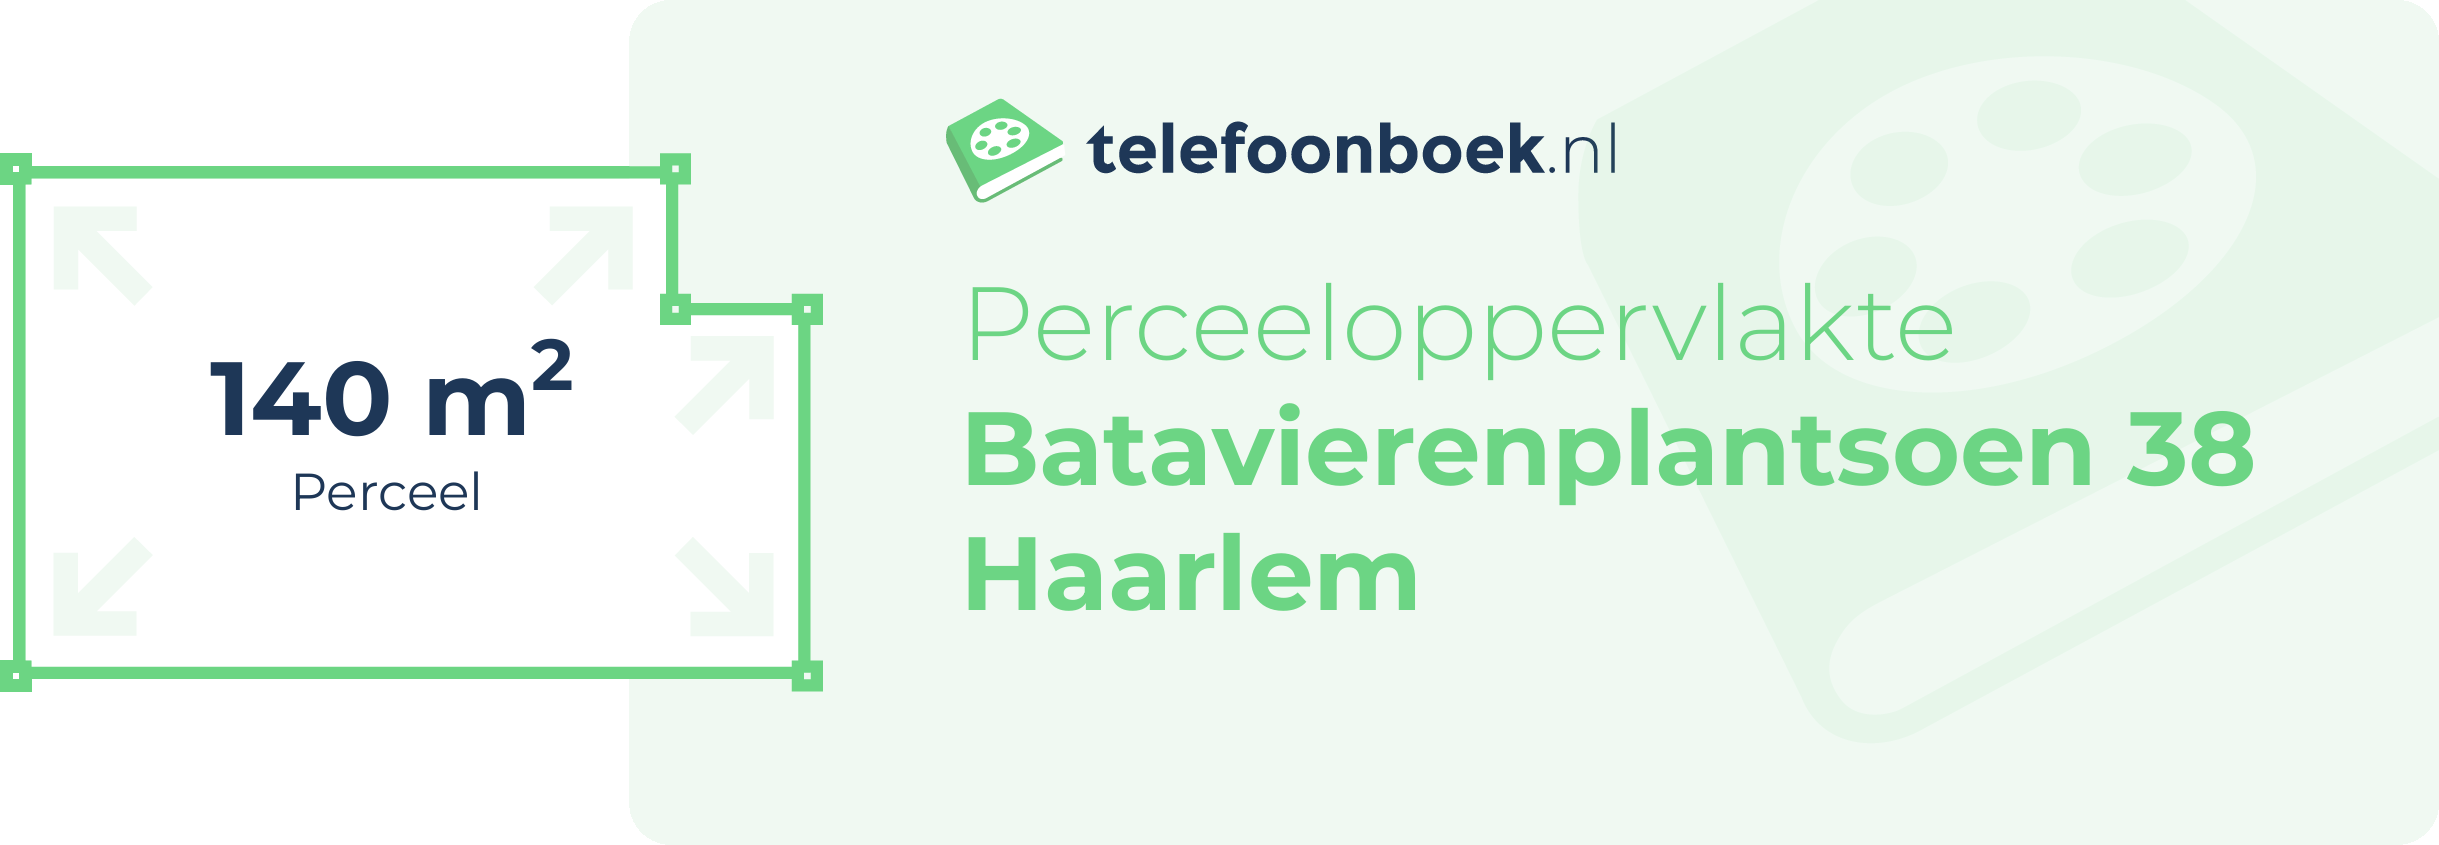 Perceeloppervlakte Batavierenplantsoen 38 Haarlem